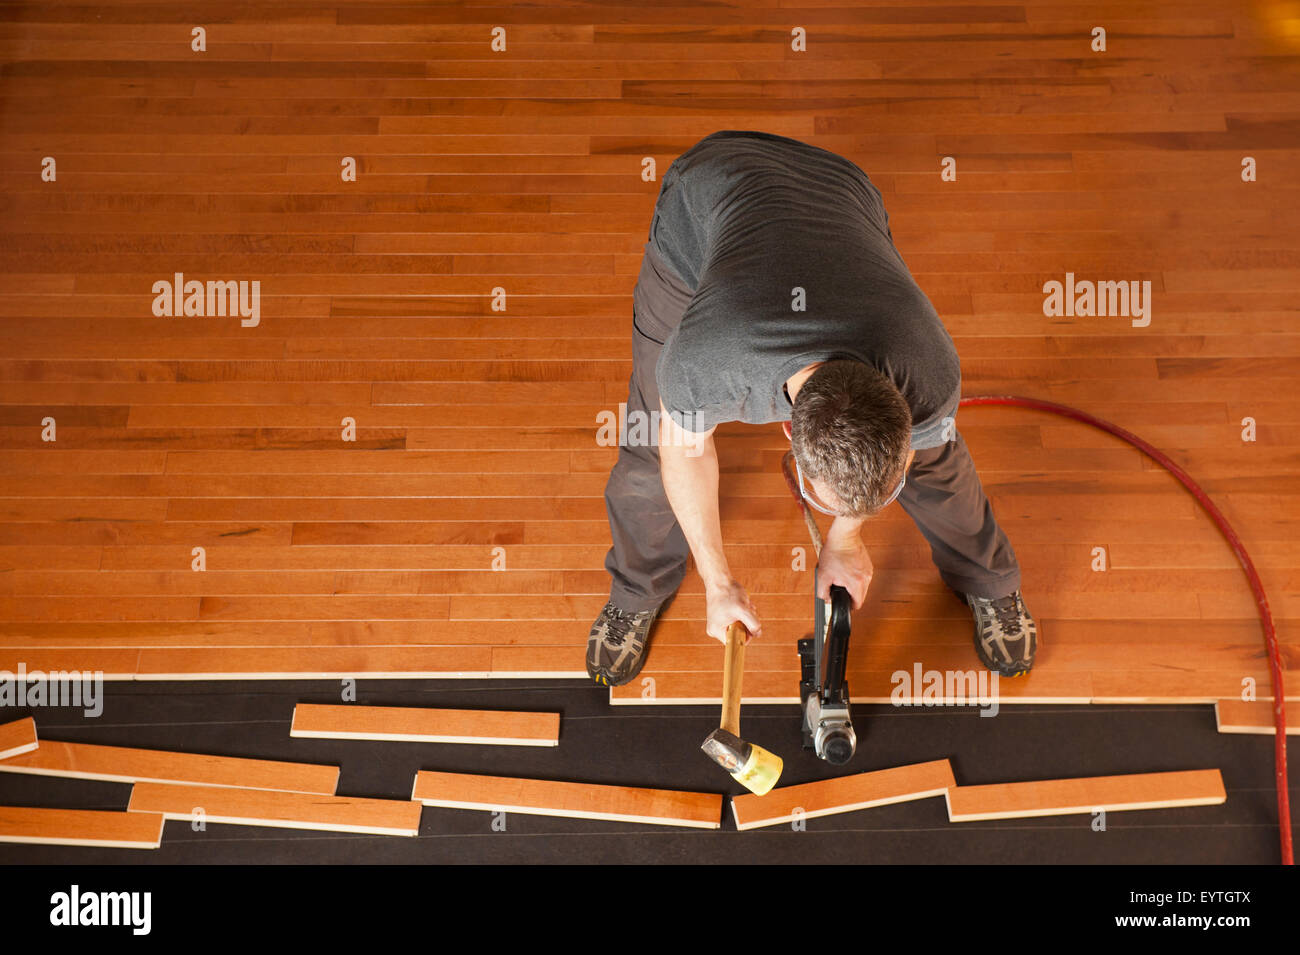 Top View Of A Man Installing Planks Of Hardwood Floor Stock Photo